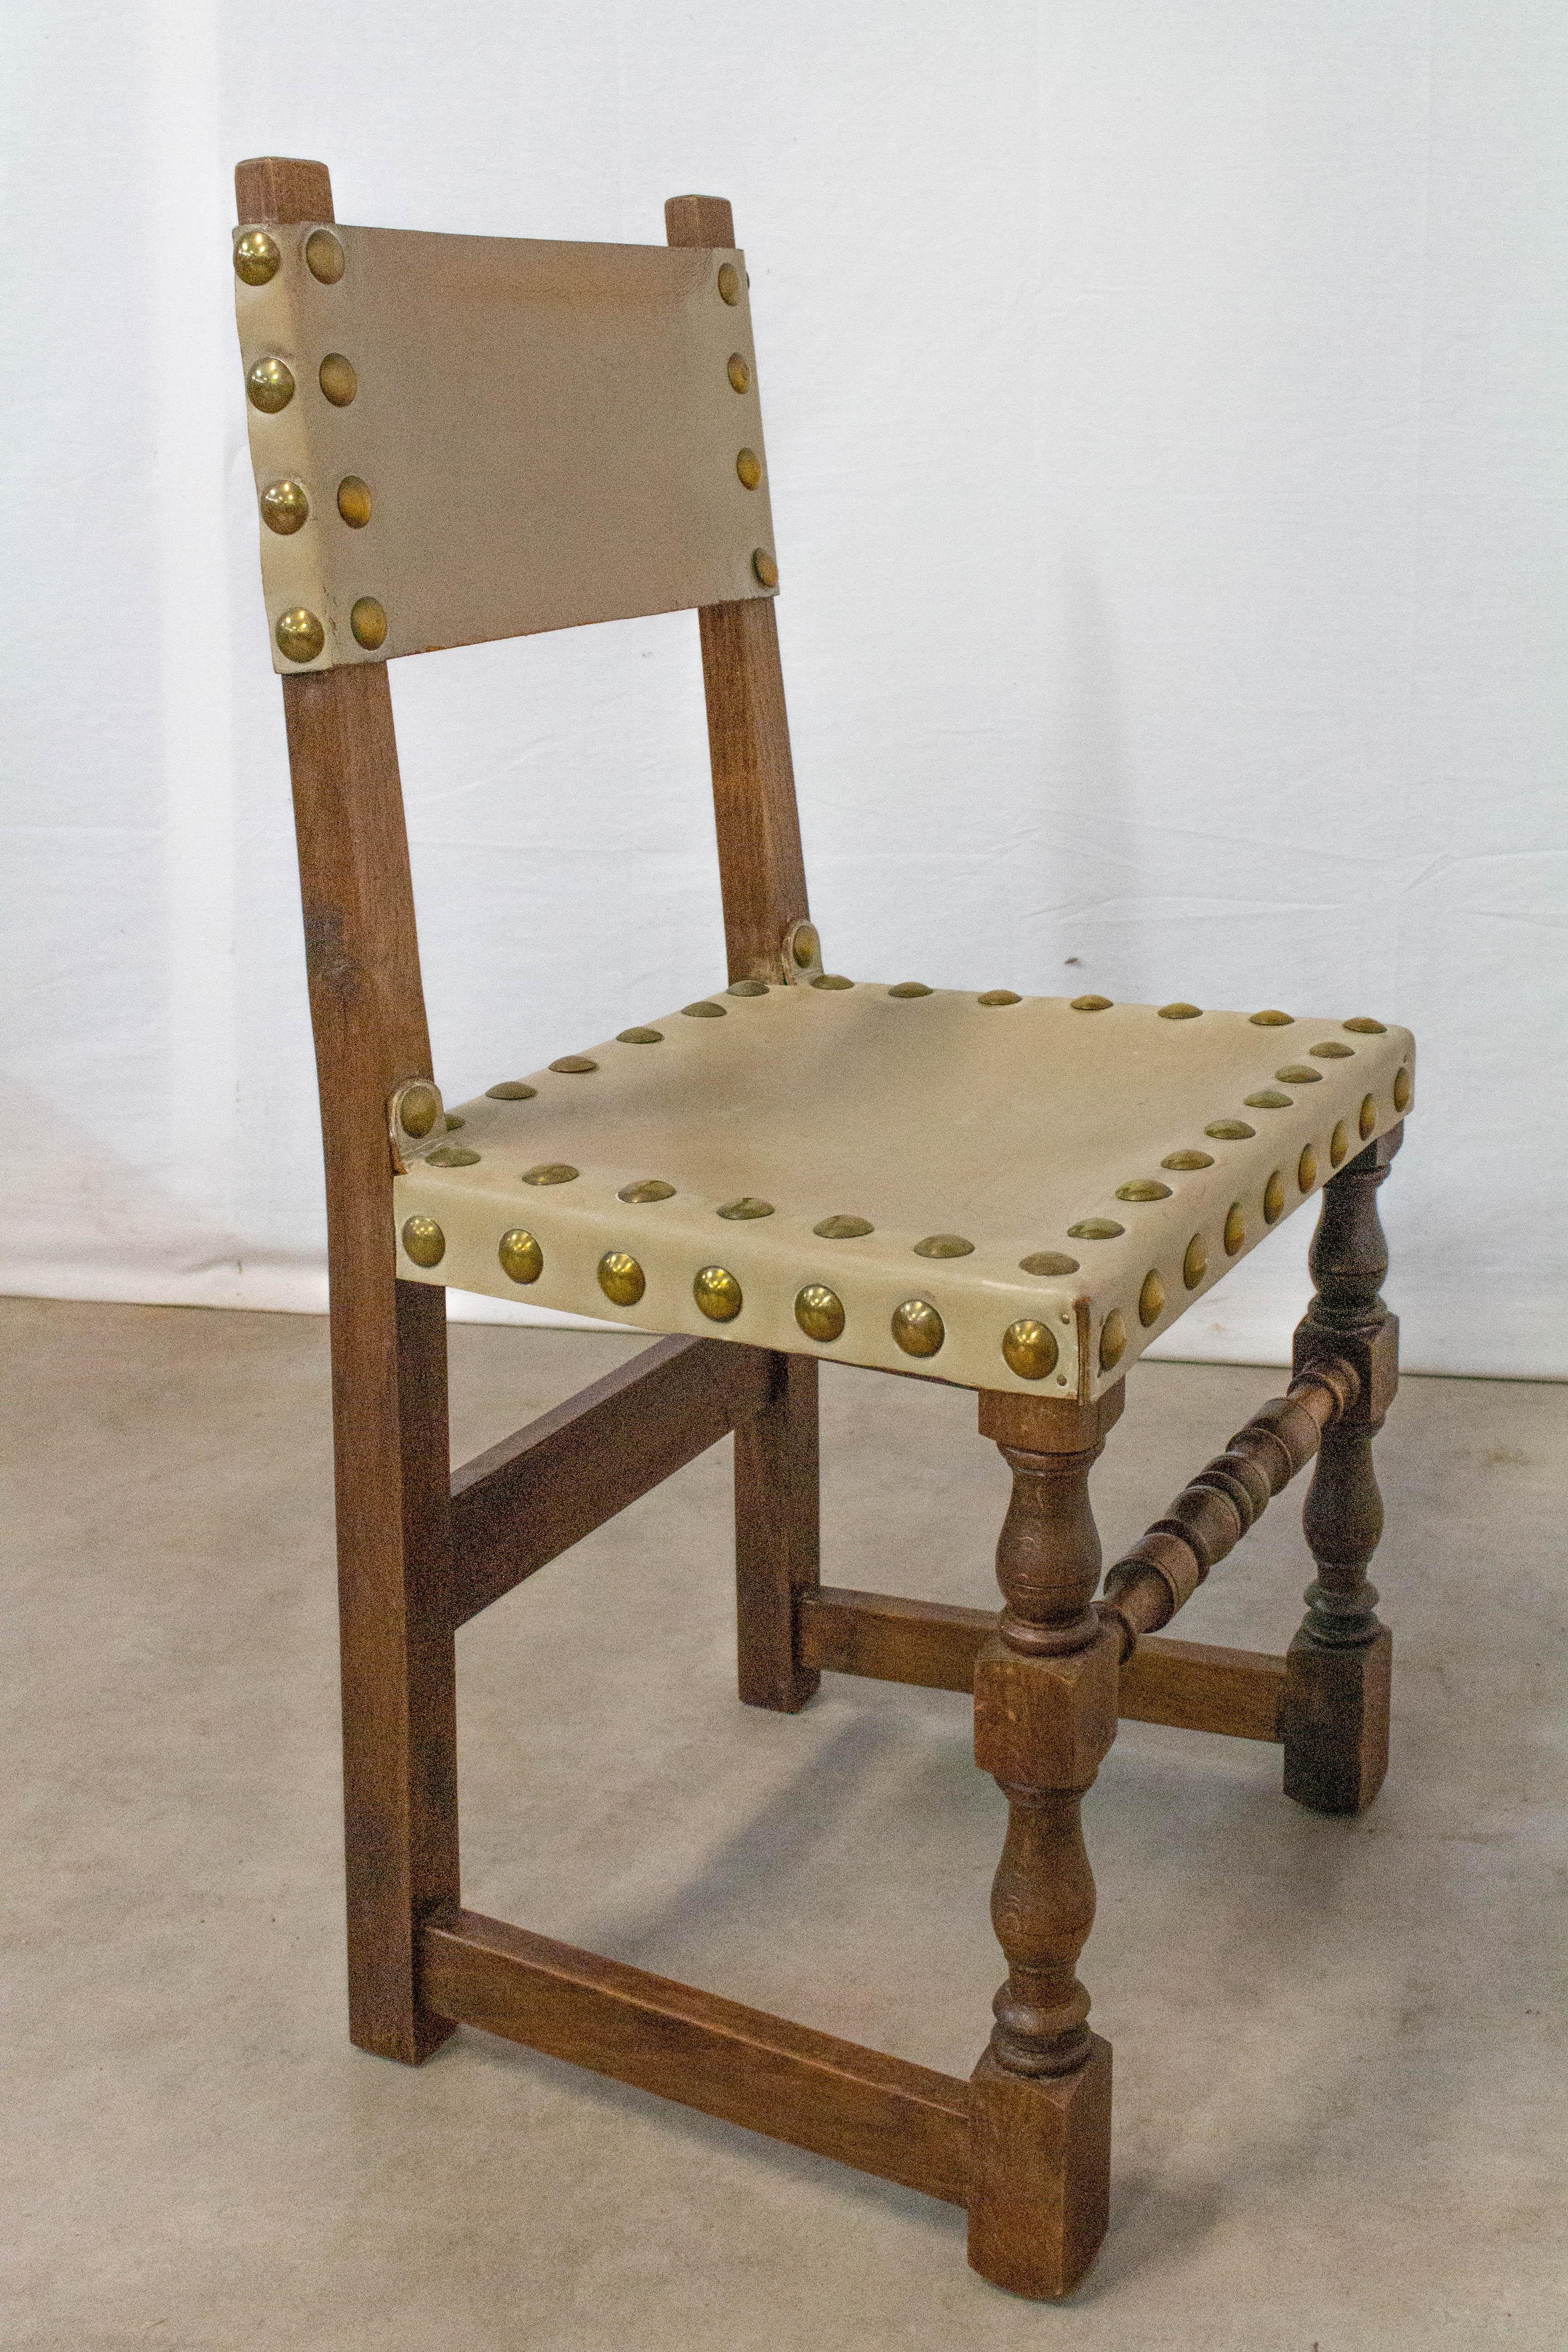 chair studs